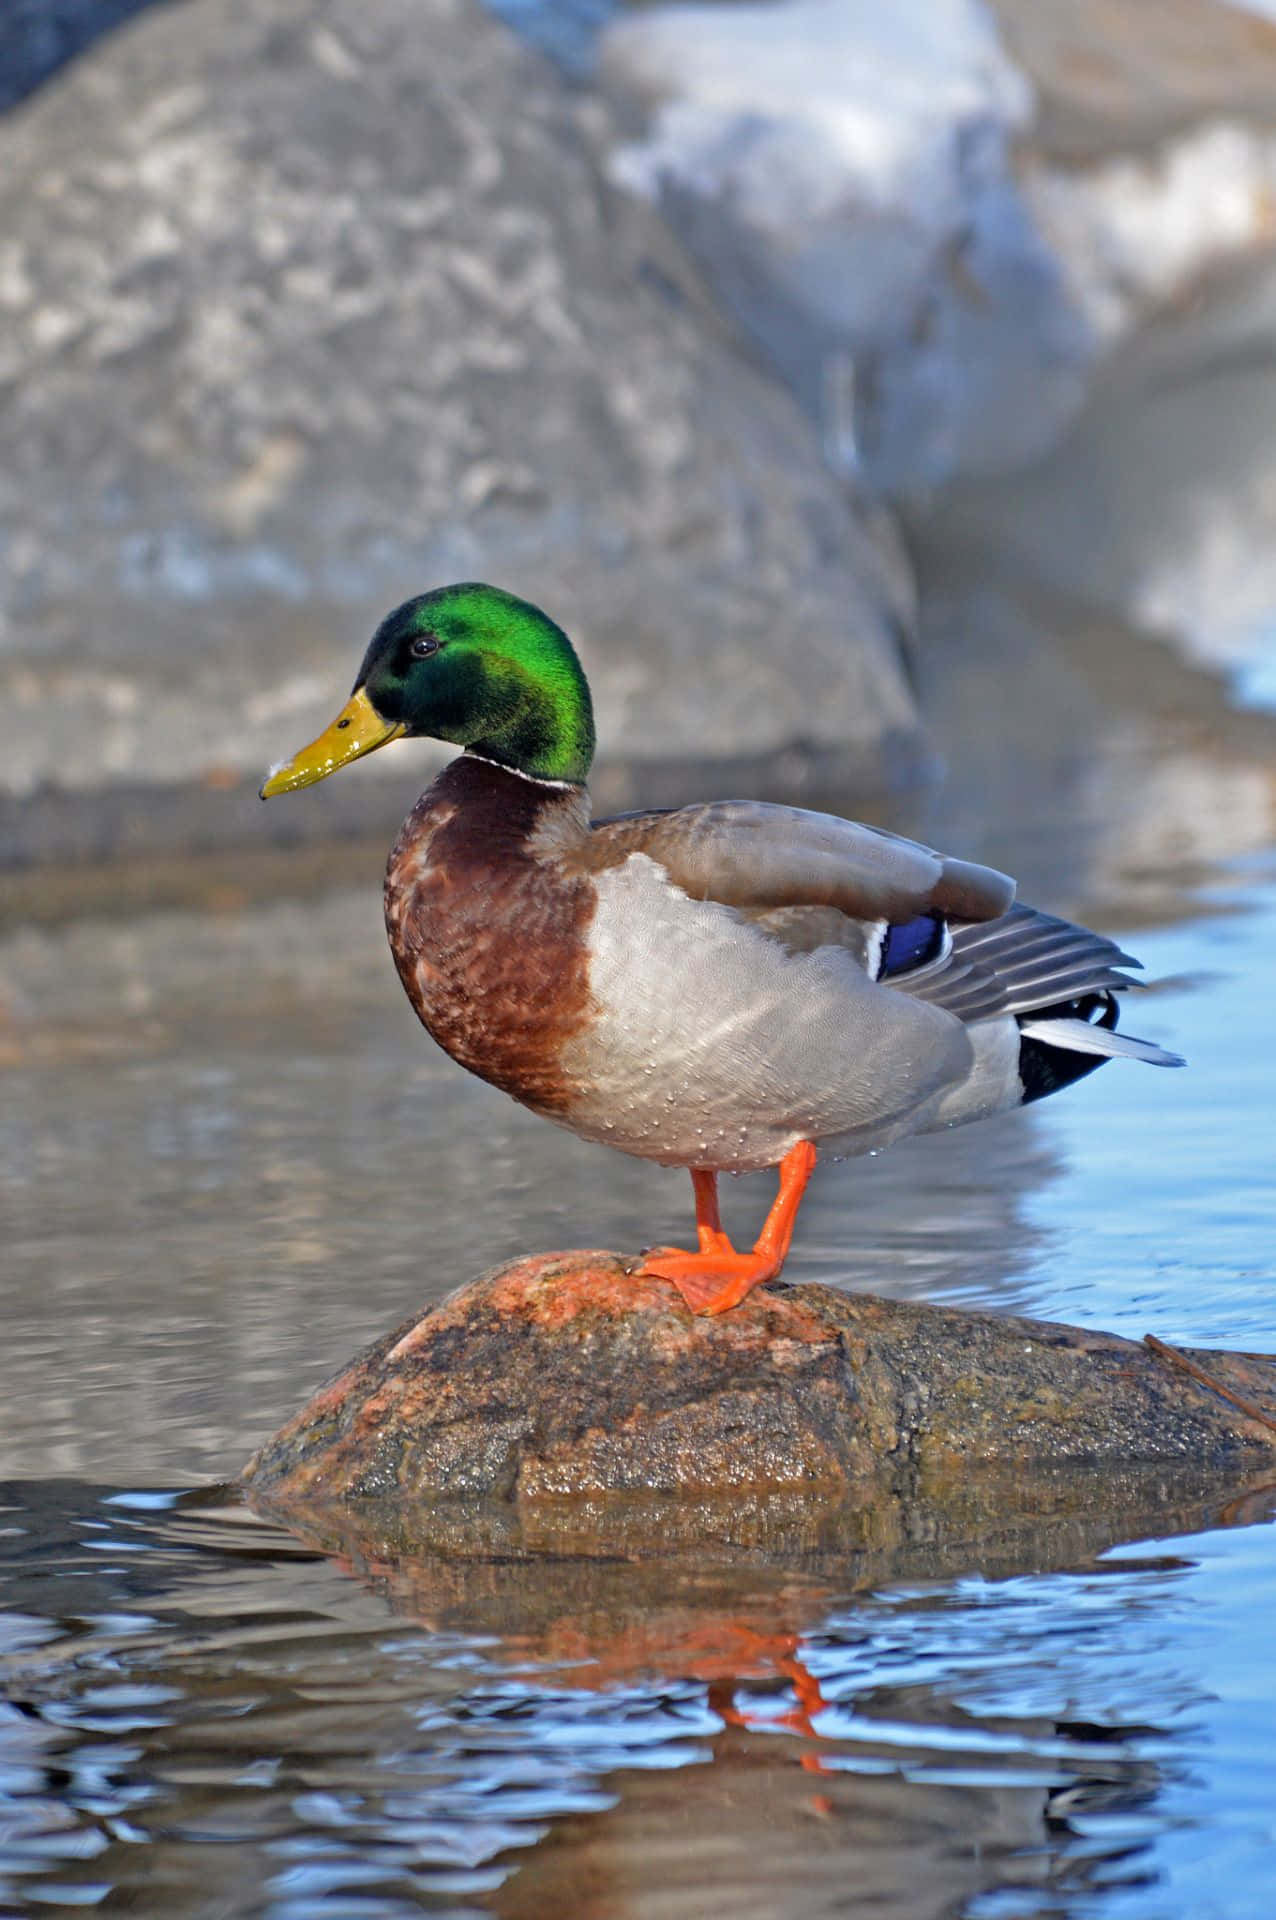 A close-up photo of a vibrant Mallard Duck